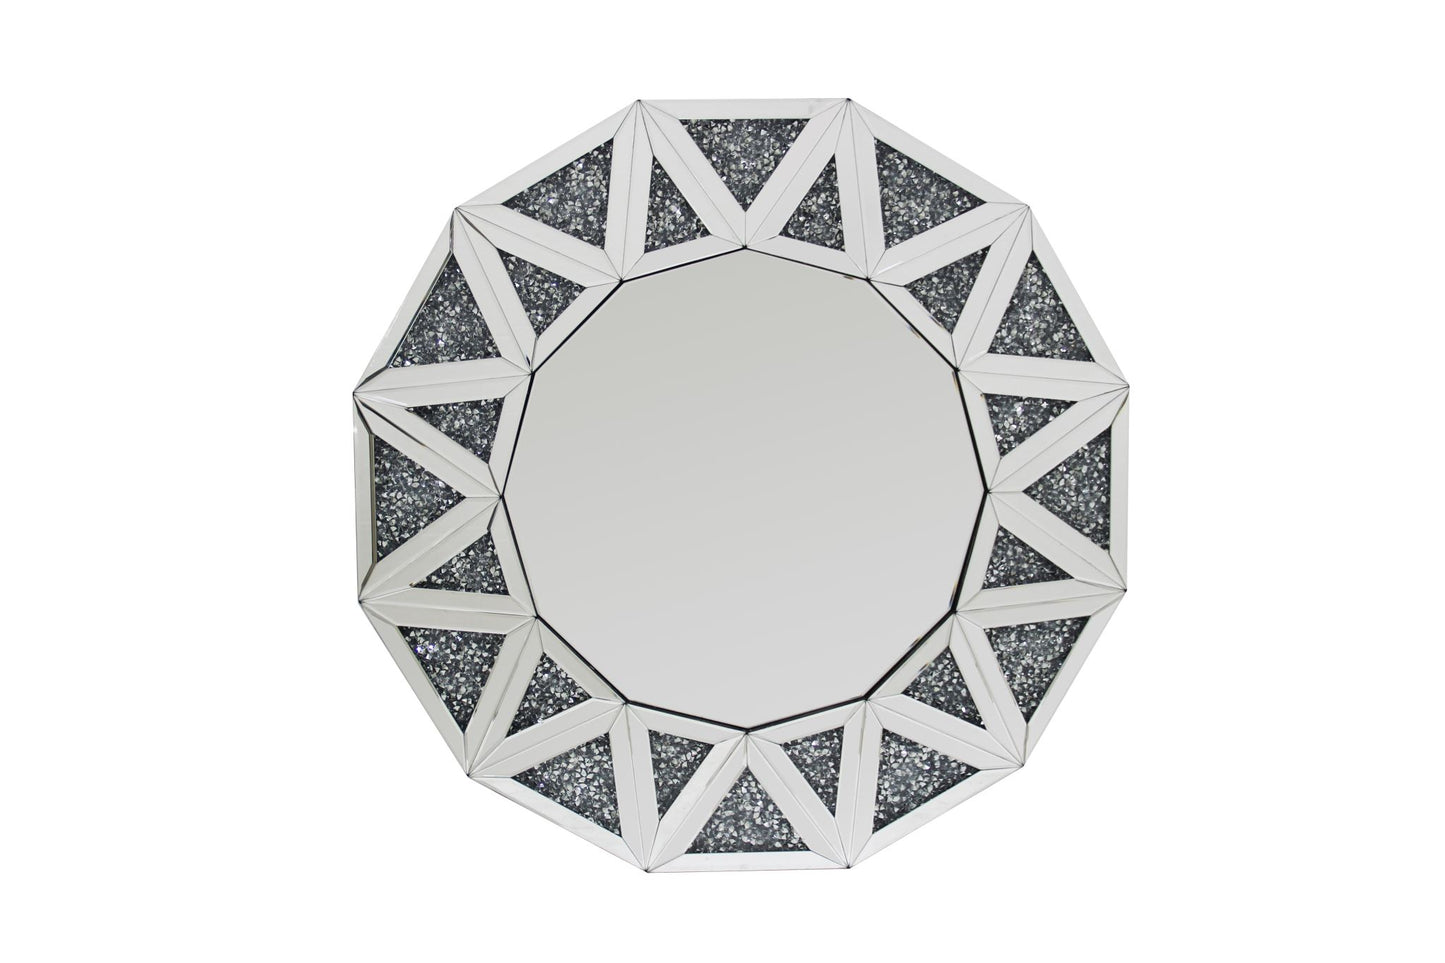 Diamond star mirror